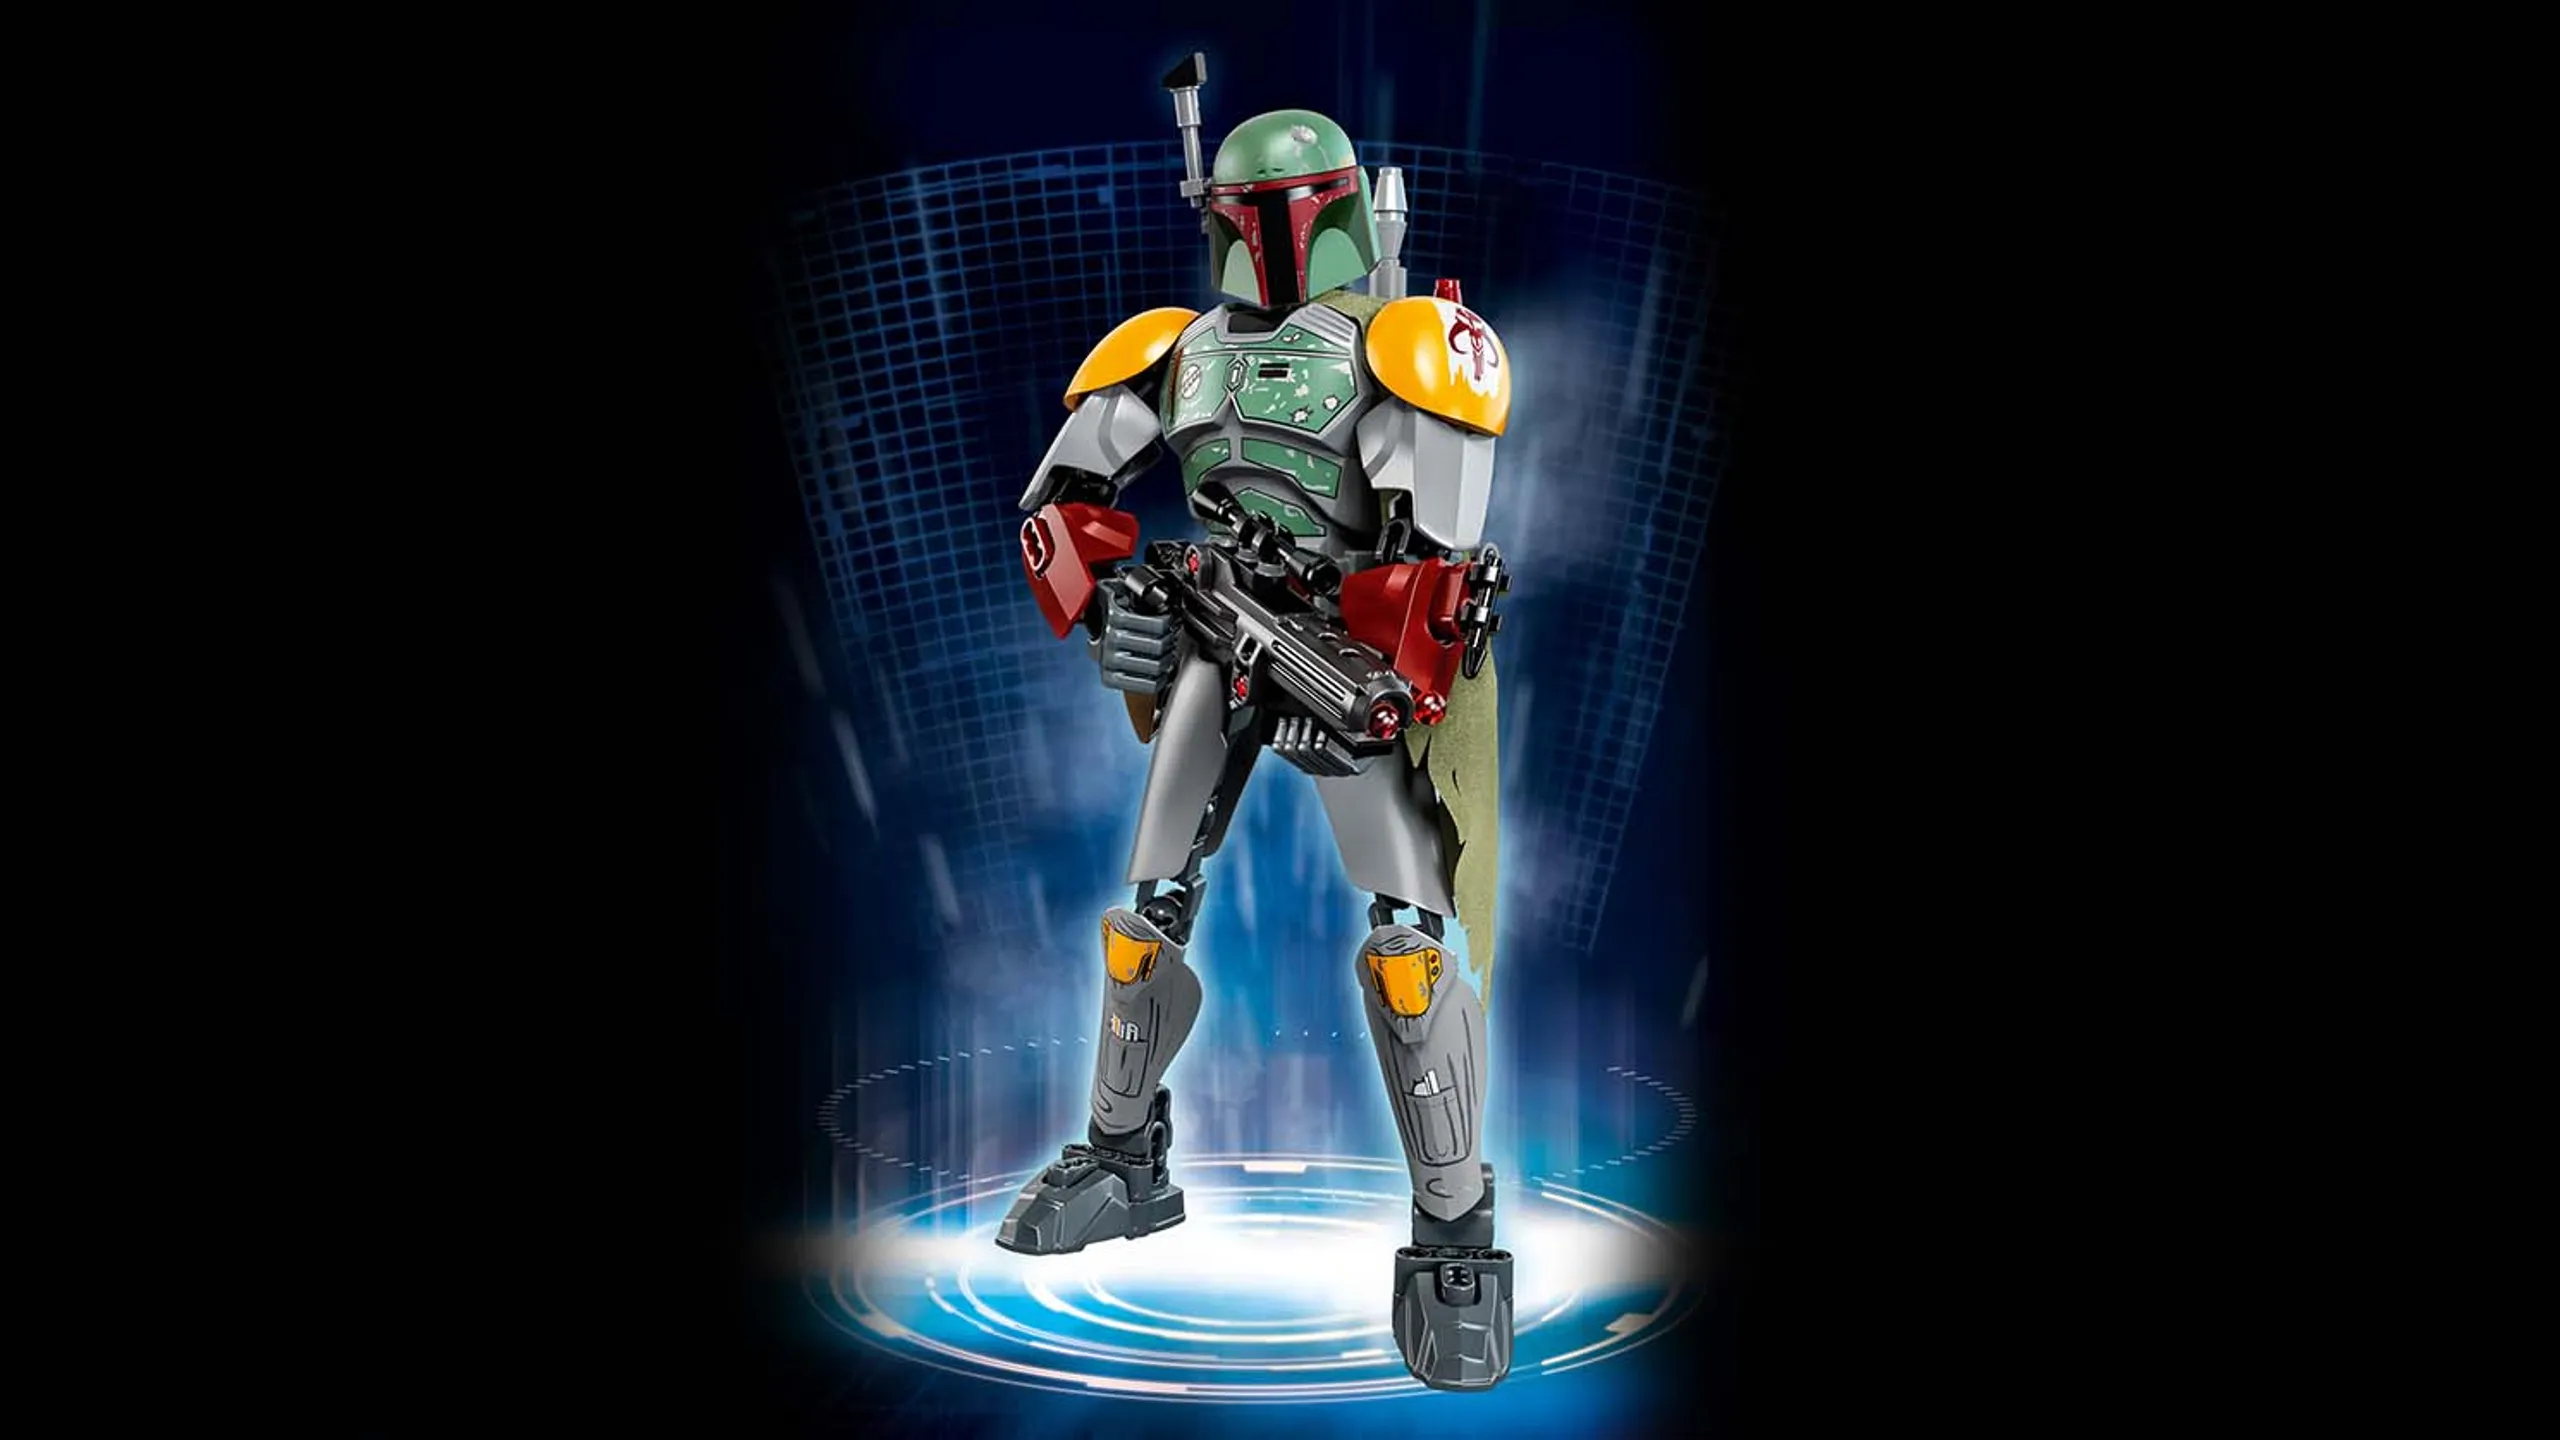 75533 - LEGO Star Wars - Boba Fett™ - Buildable Figure, Blaster Rifle, Jet Pack